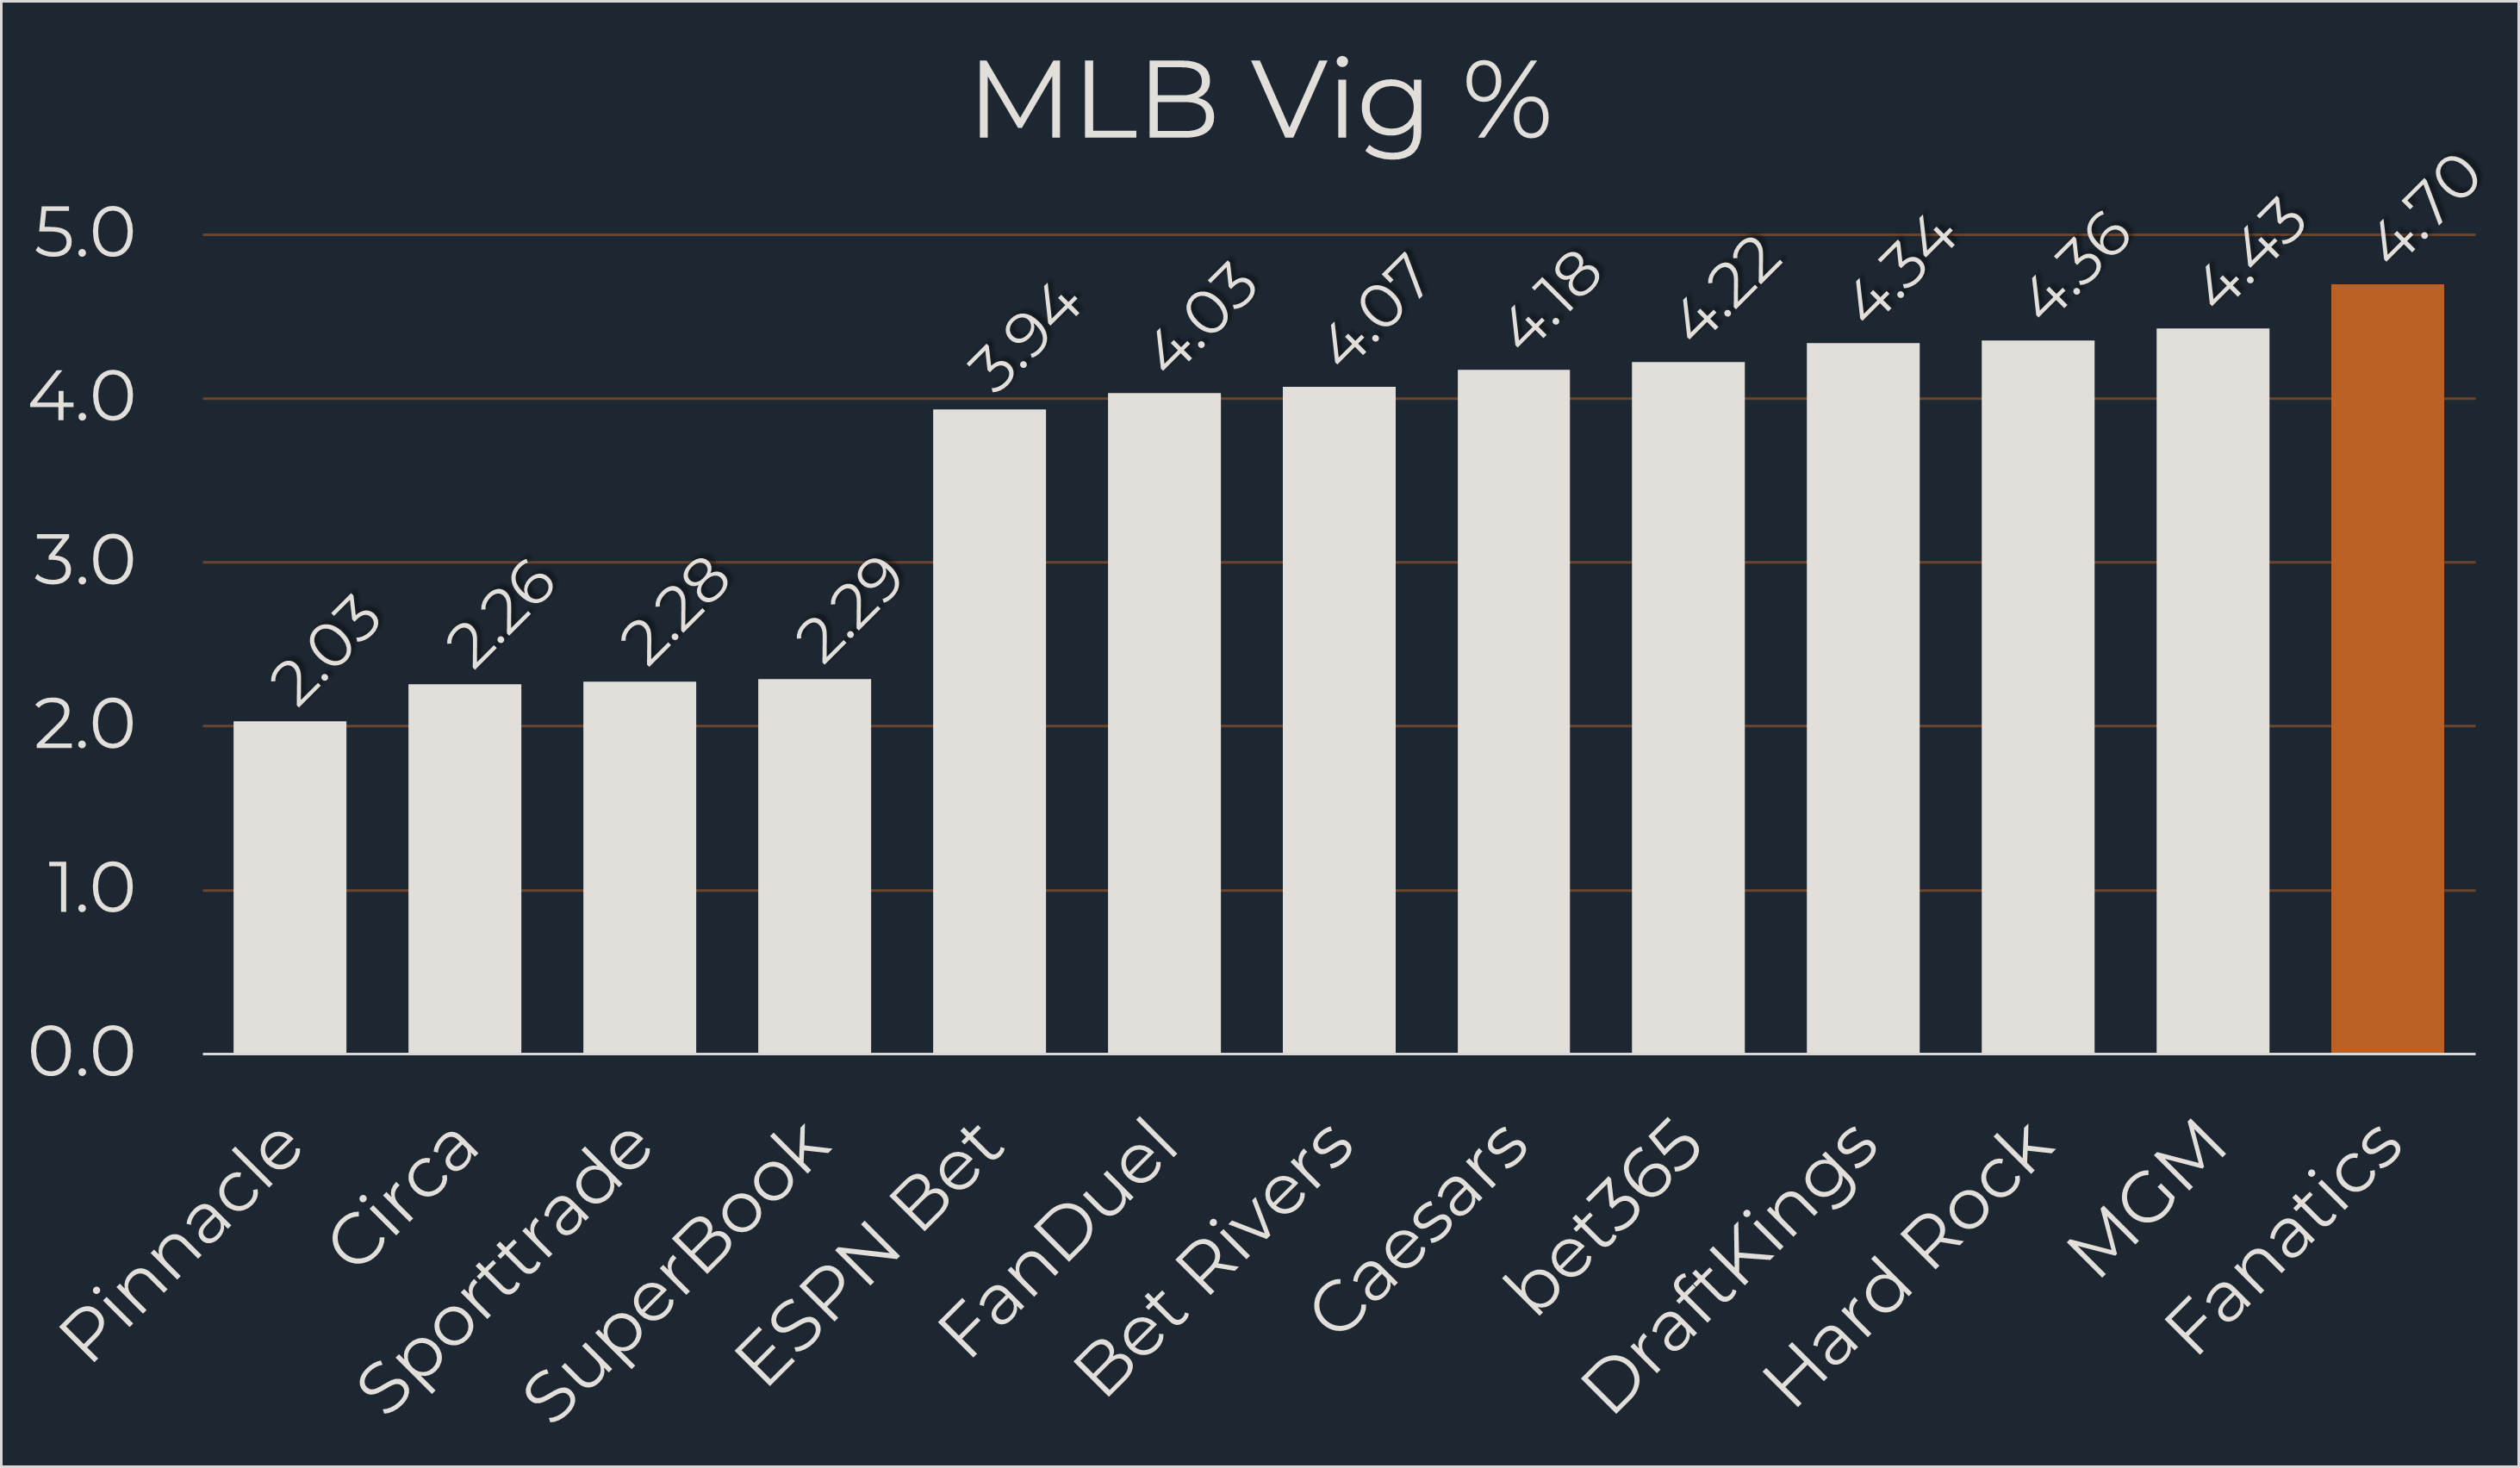 Fanatics MLB Odds comparison chart